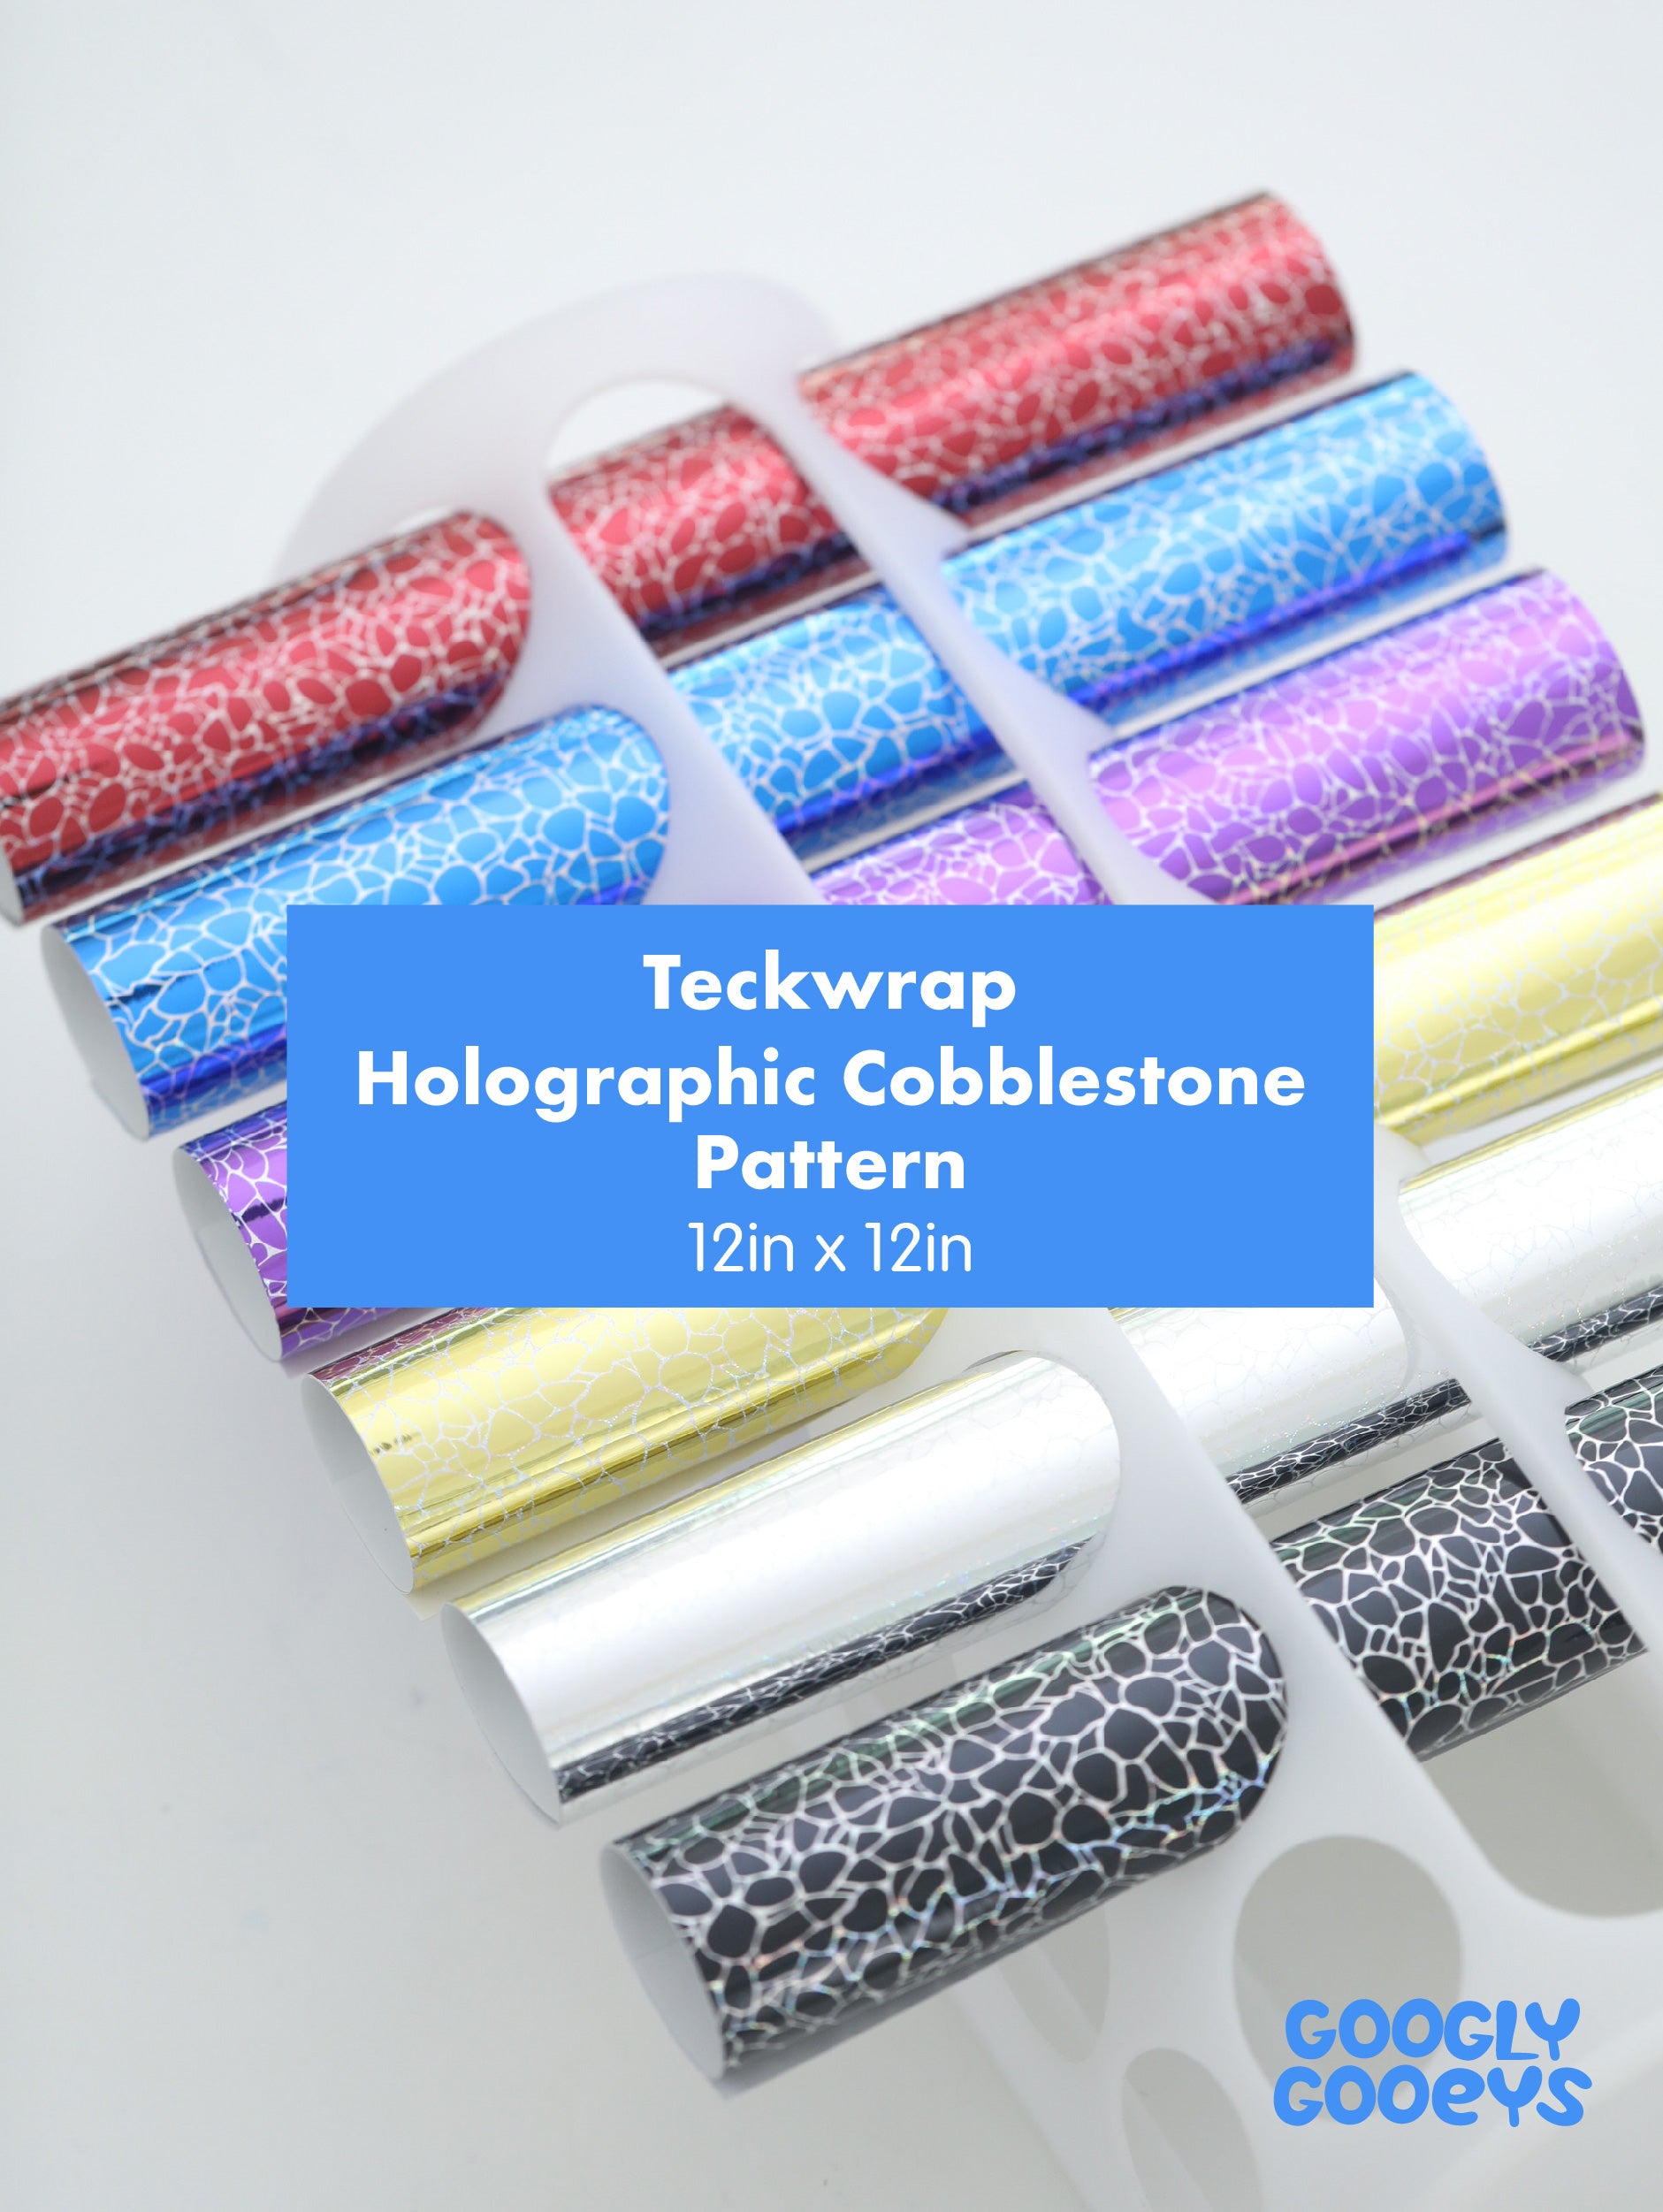 Teckwrap Holographic Cobblestone Pattern Adhesive Vinyl Stickers